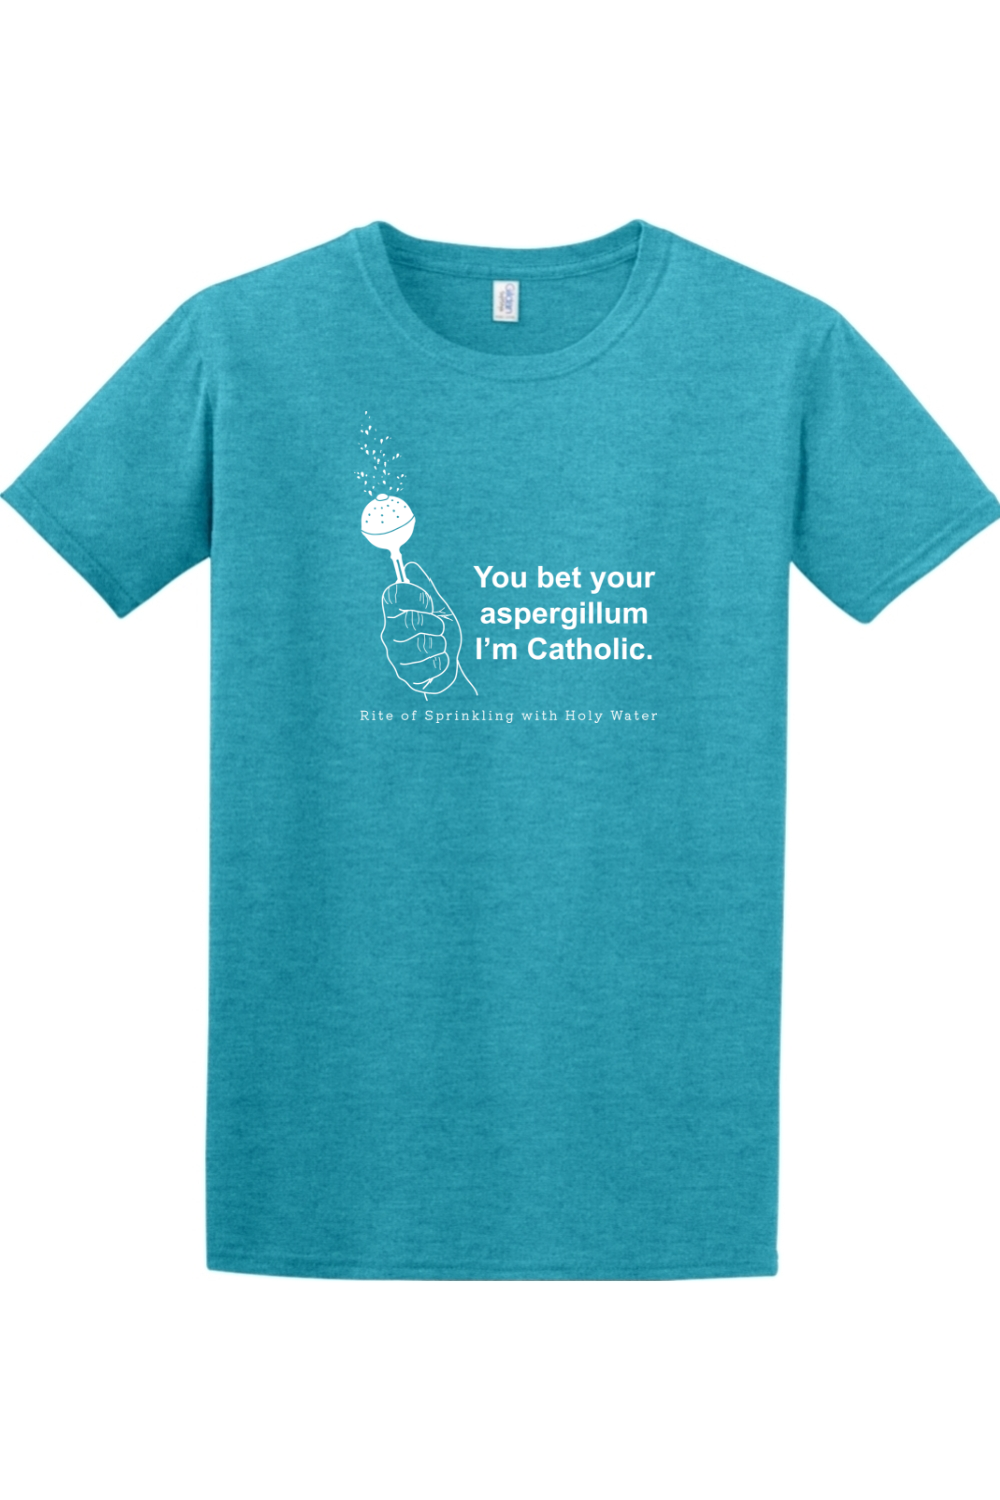 Bet your Aspergillum Adult T-Shirt